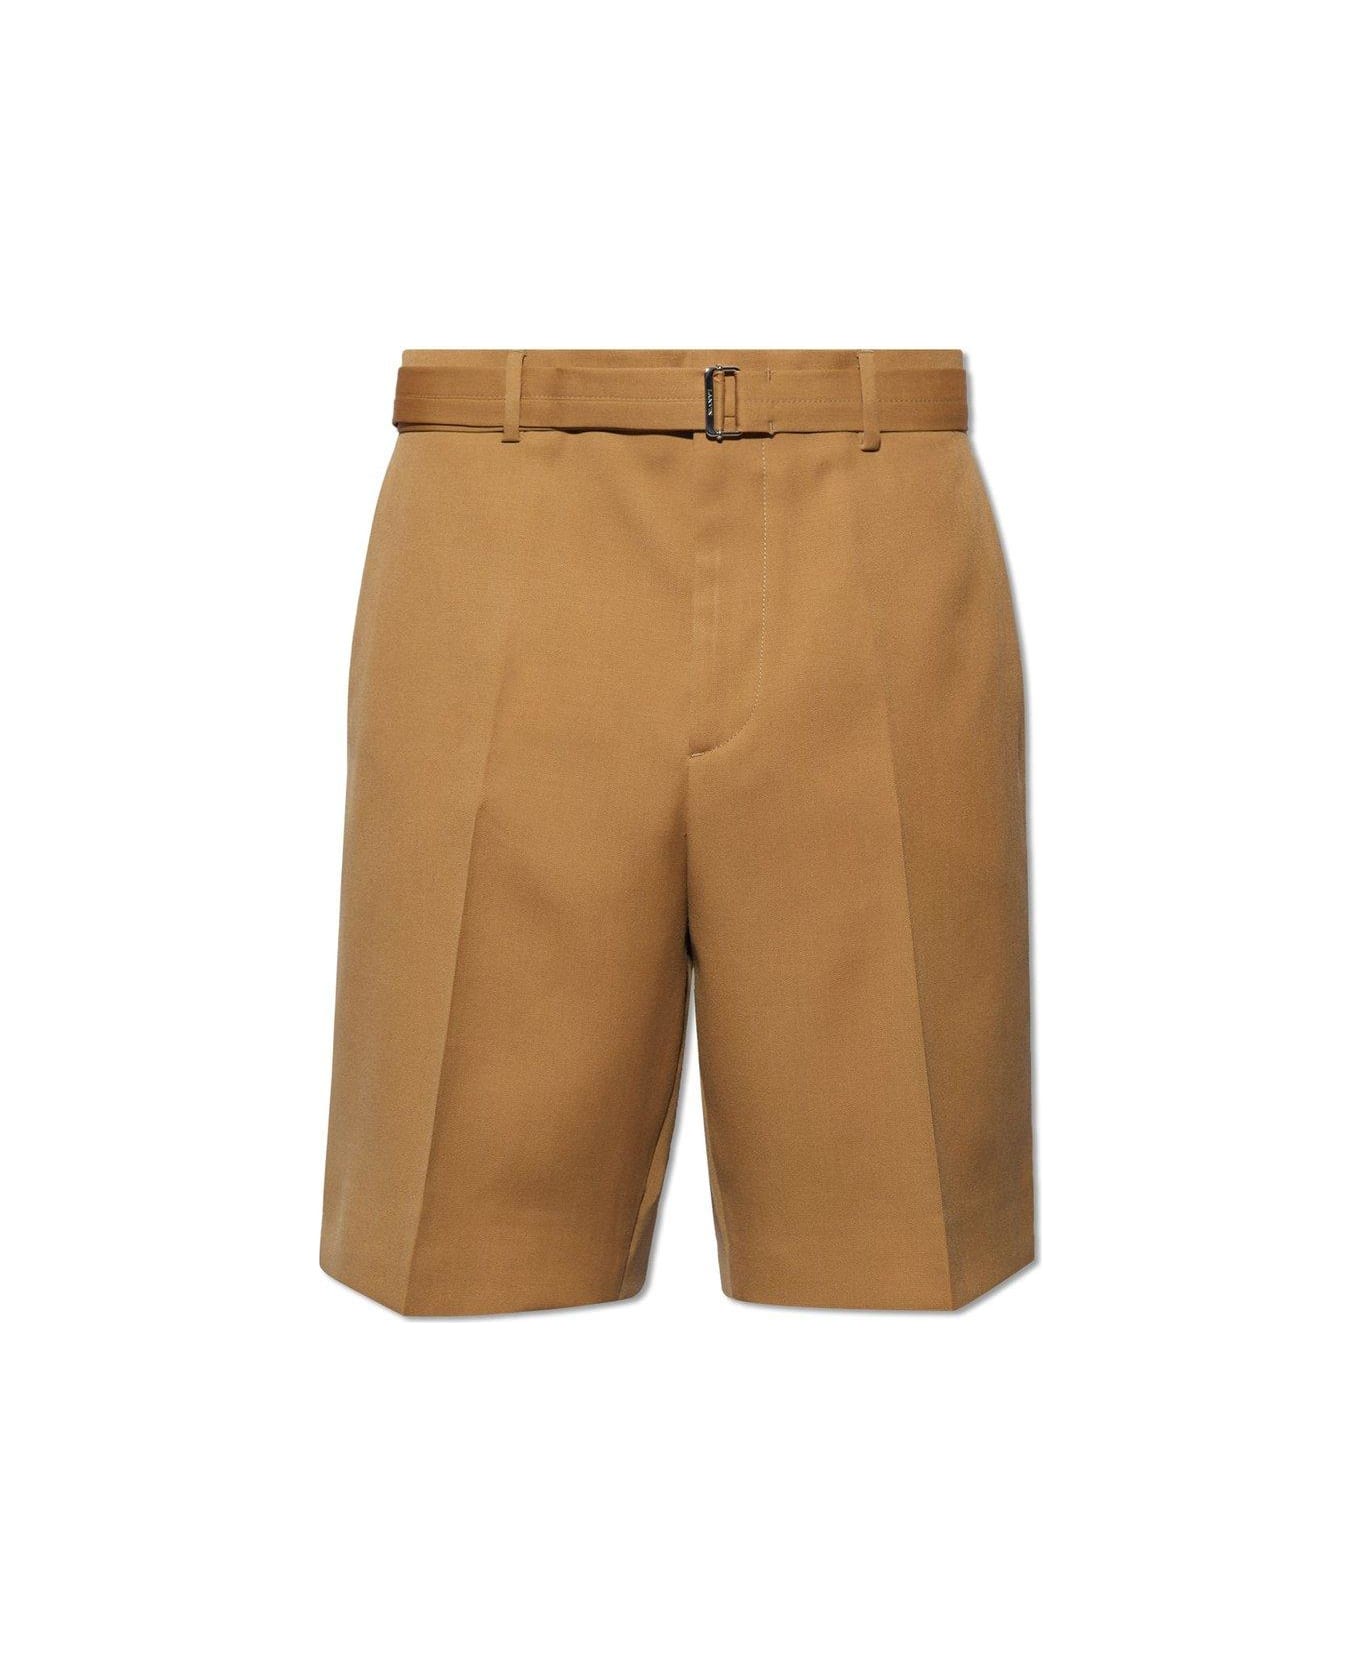 Lanvin Pressed Crease Belted Shorts - Beige ショートパンツ